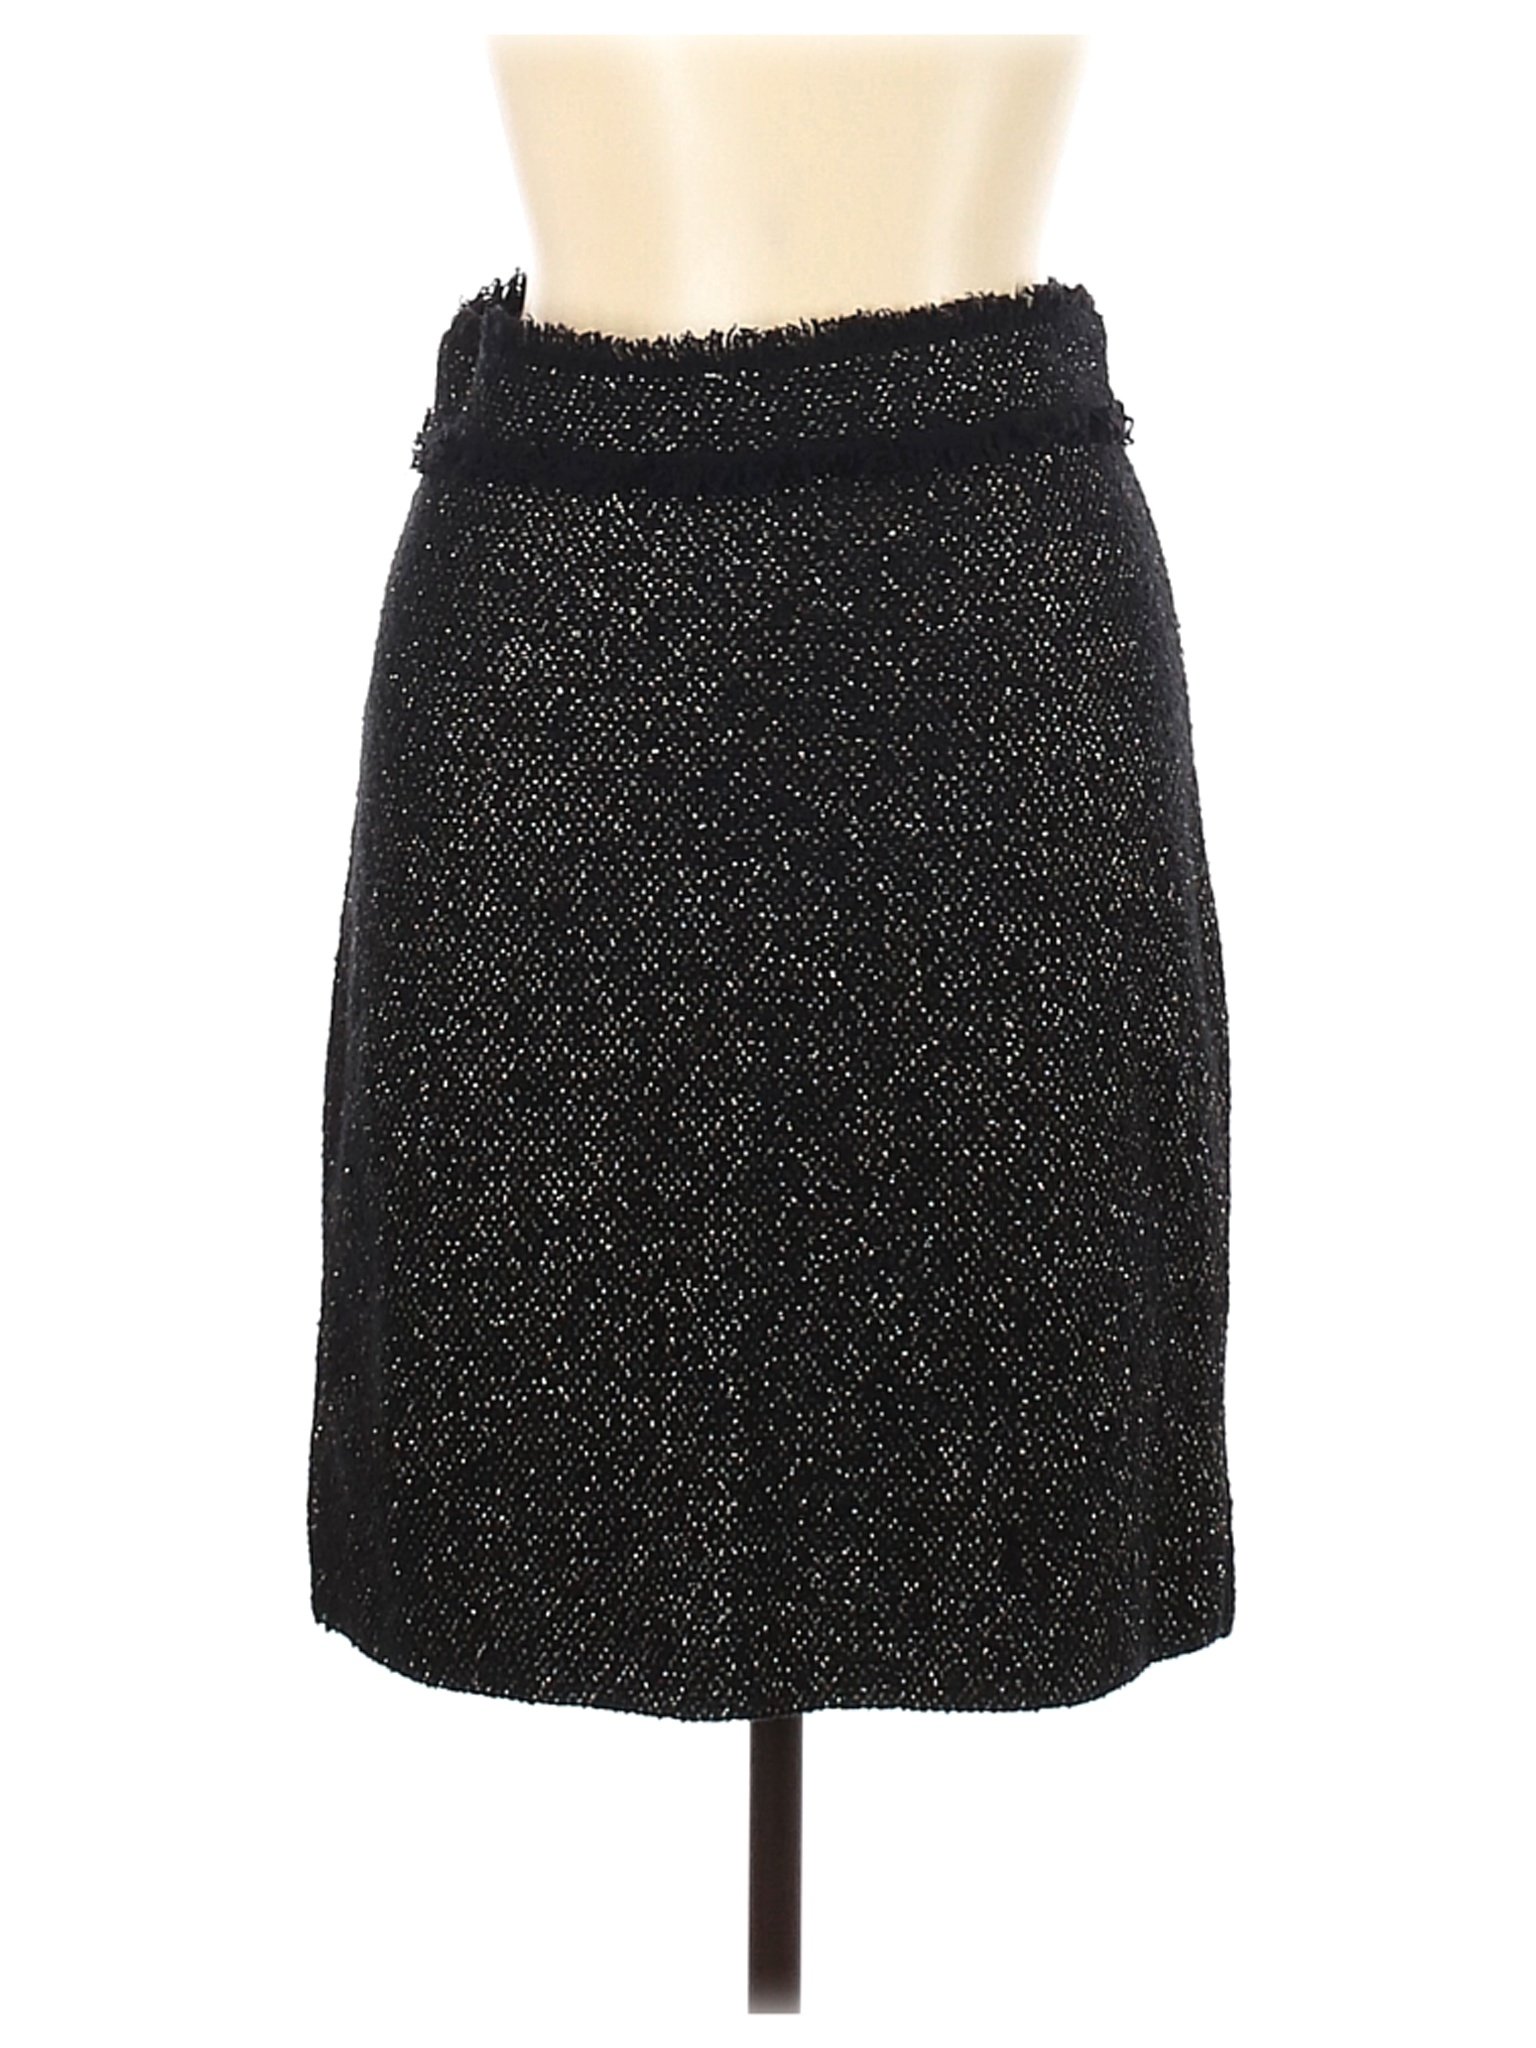 Massimo Dutti Women Black Casual Skirt L | eBay